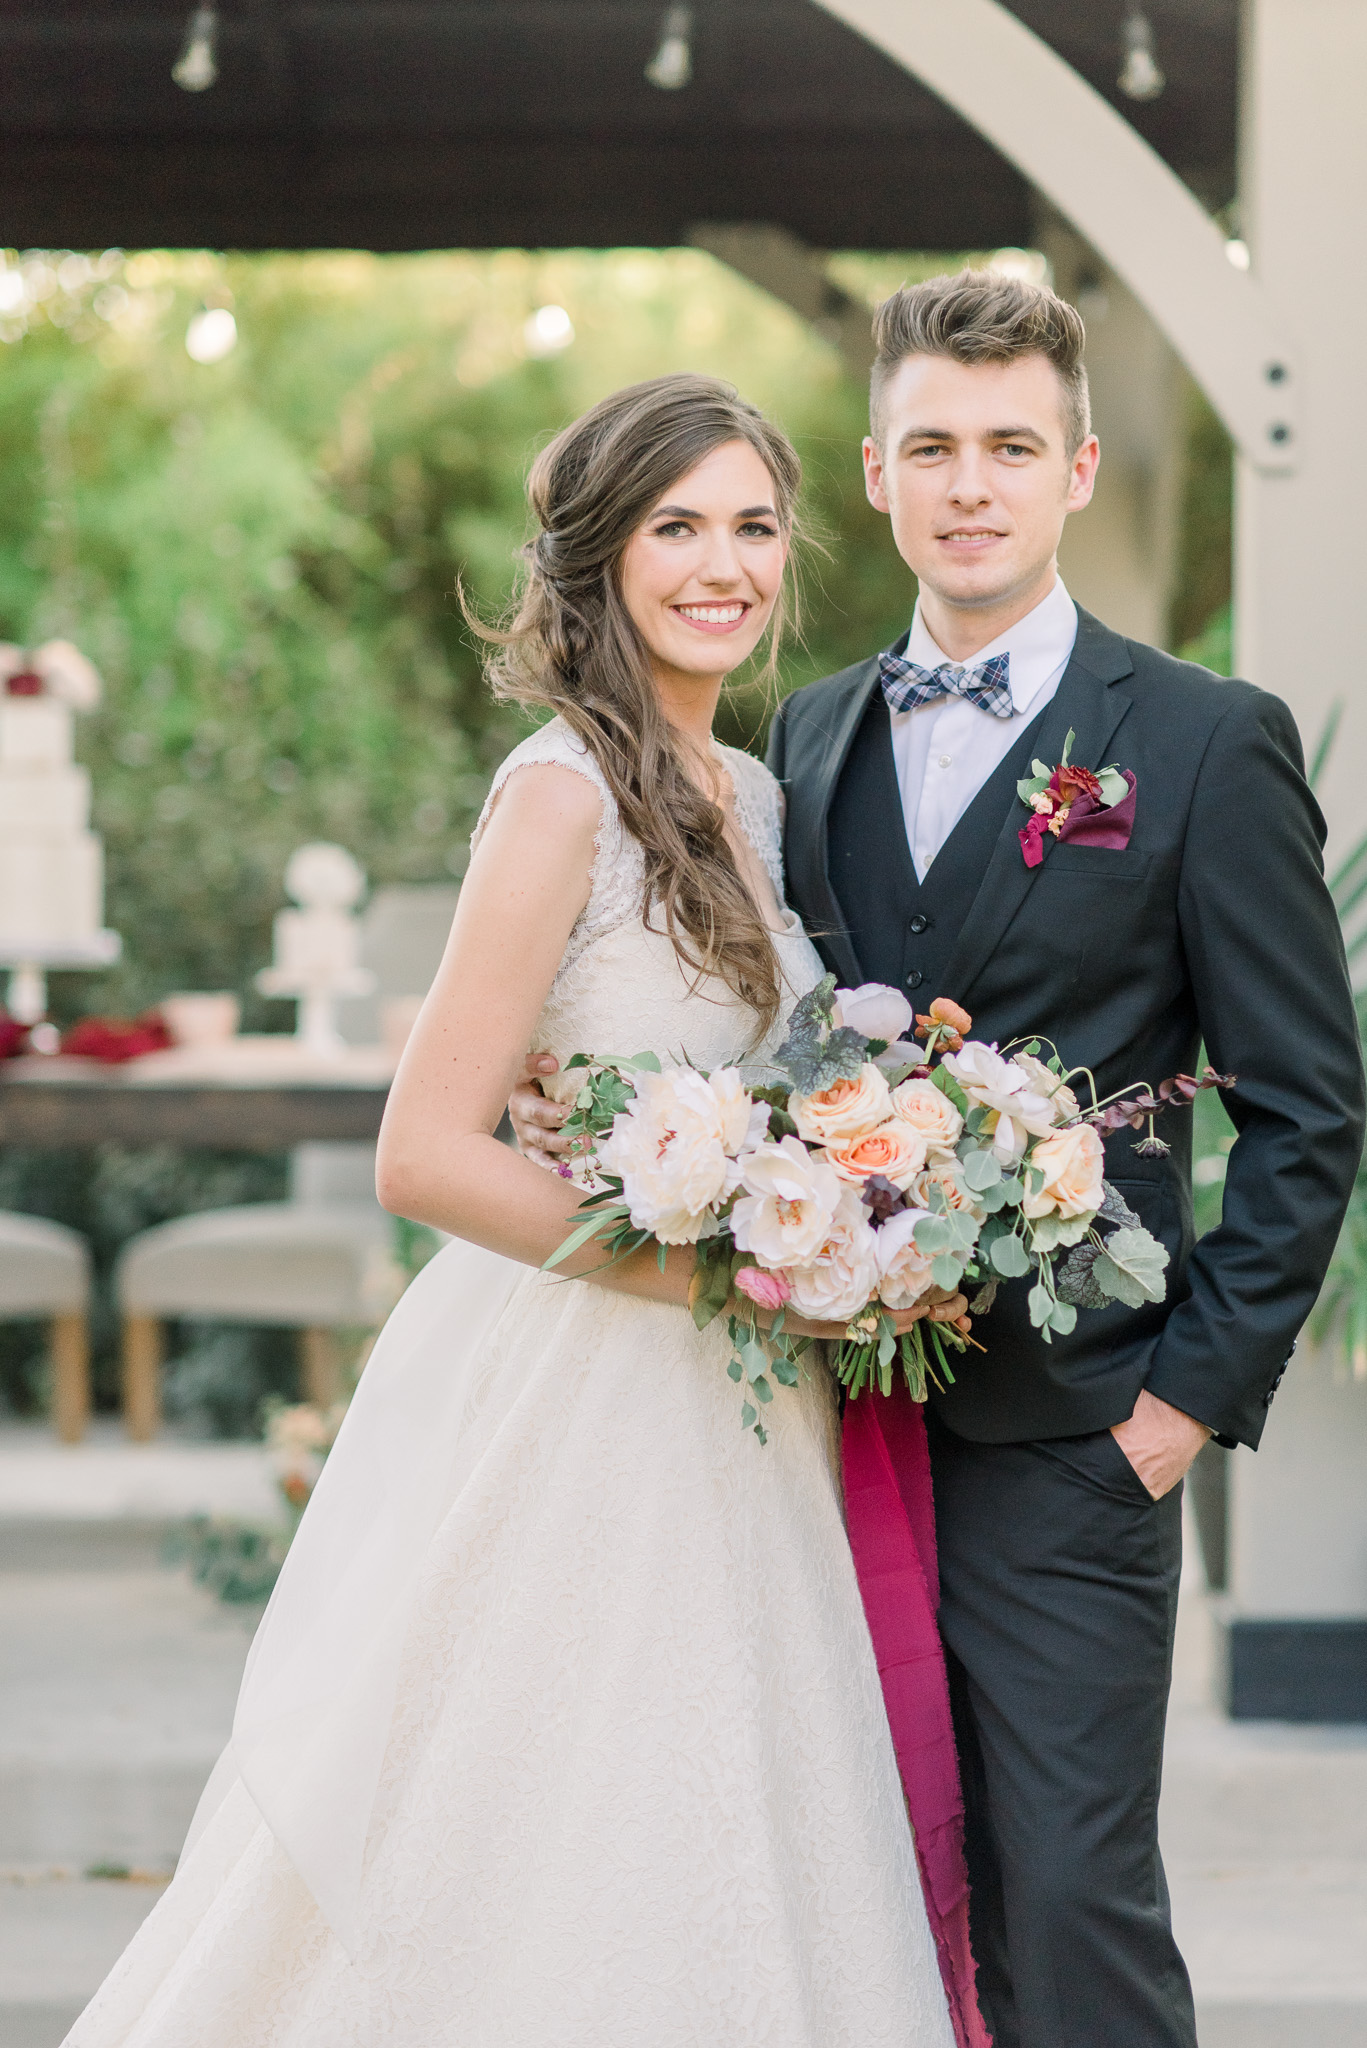 Tucson Medella Vina Wedding Photo of Bride and Groom | Tucson Wedding Photographer | West End Photography